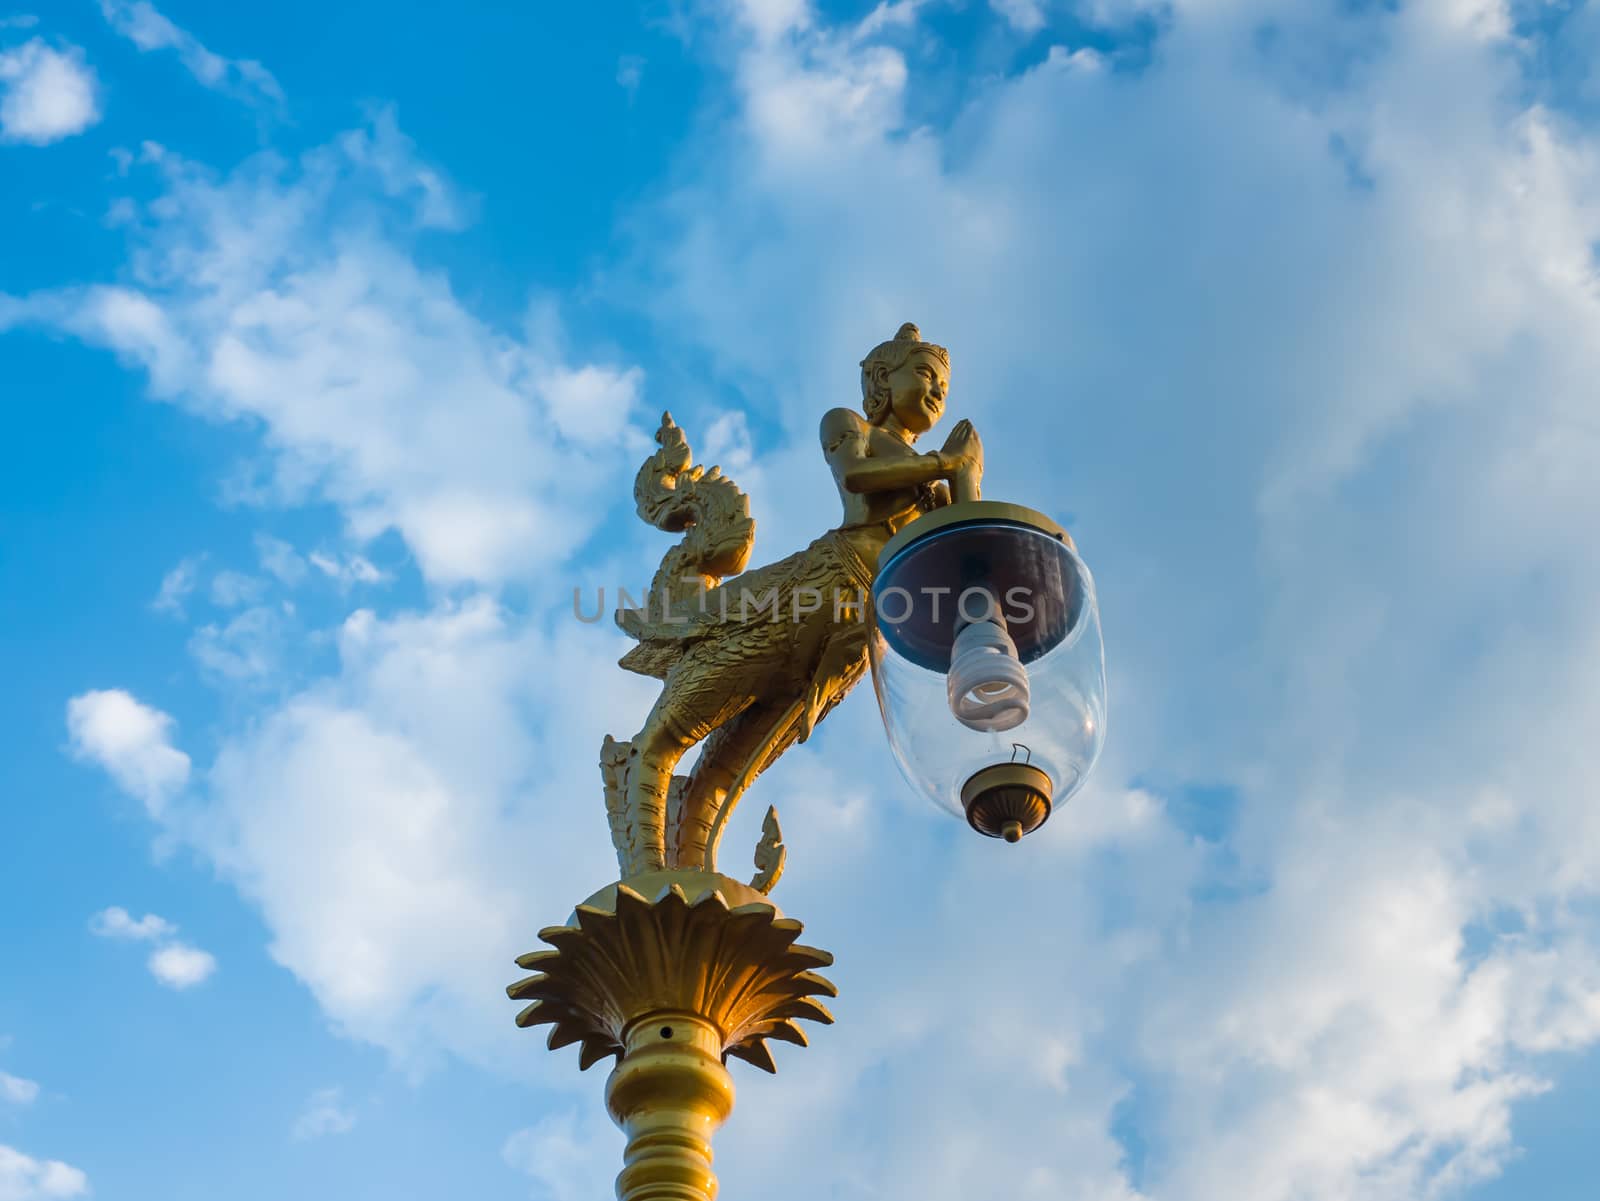 Beautiful lamp under blue sky by golengstock